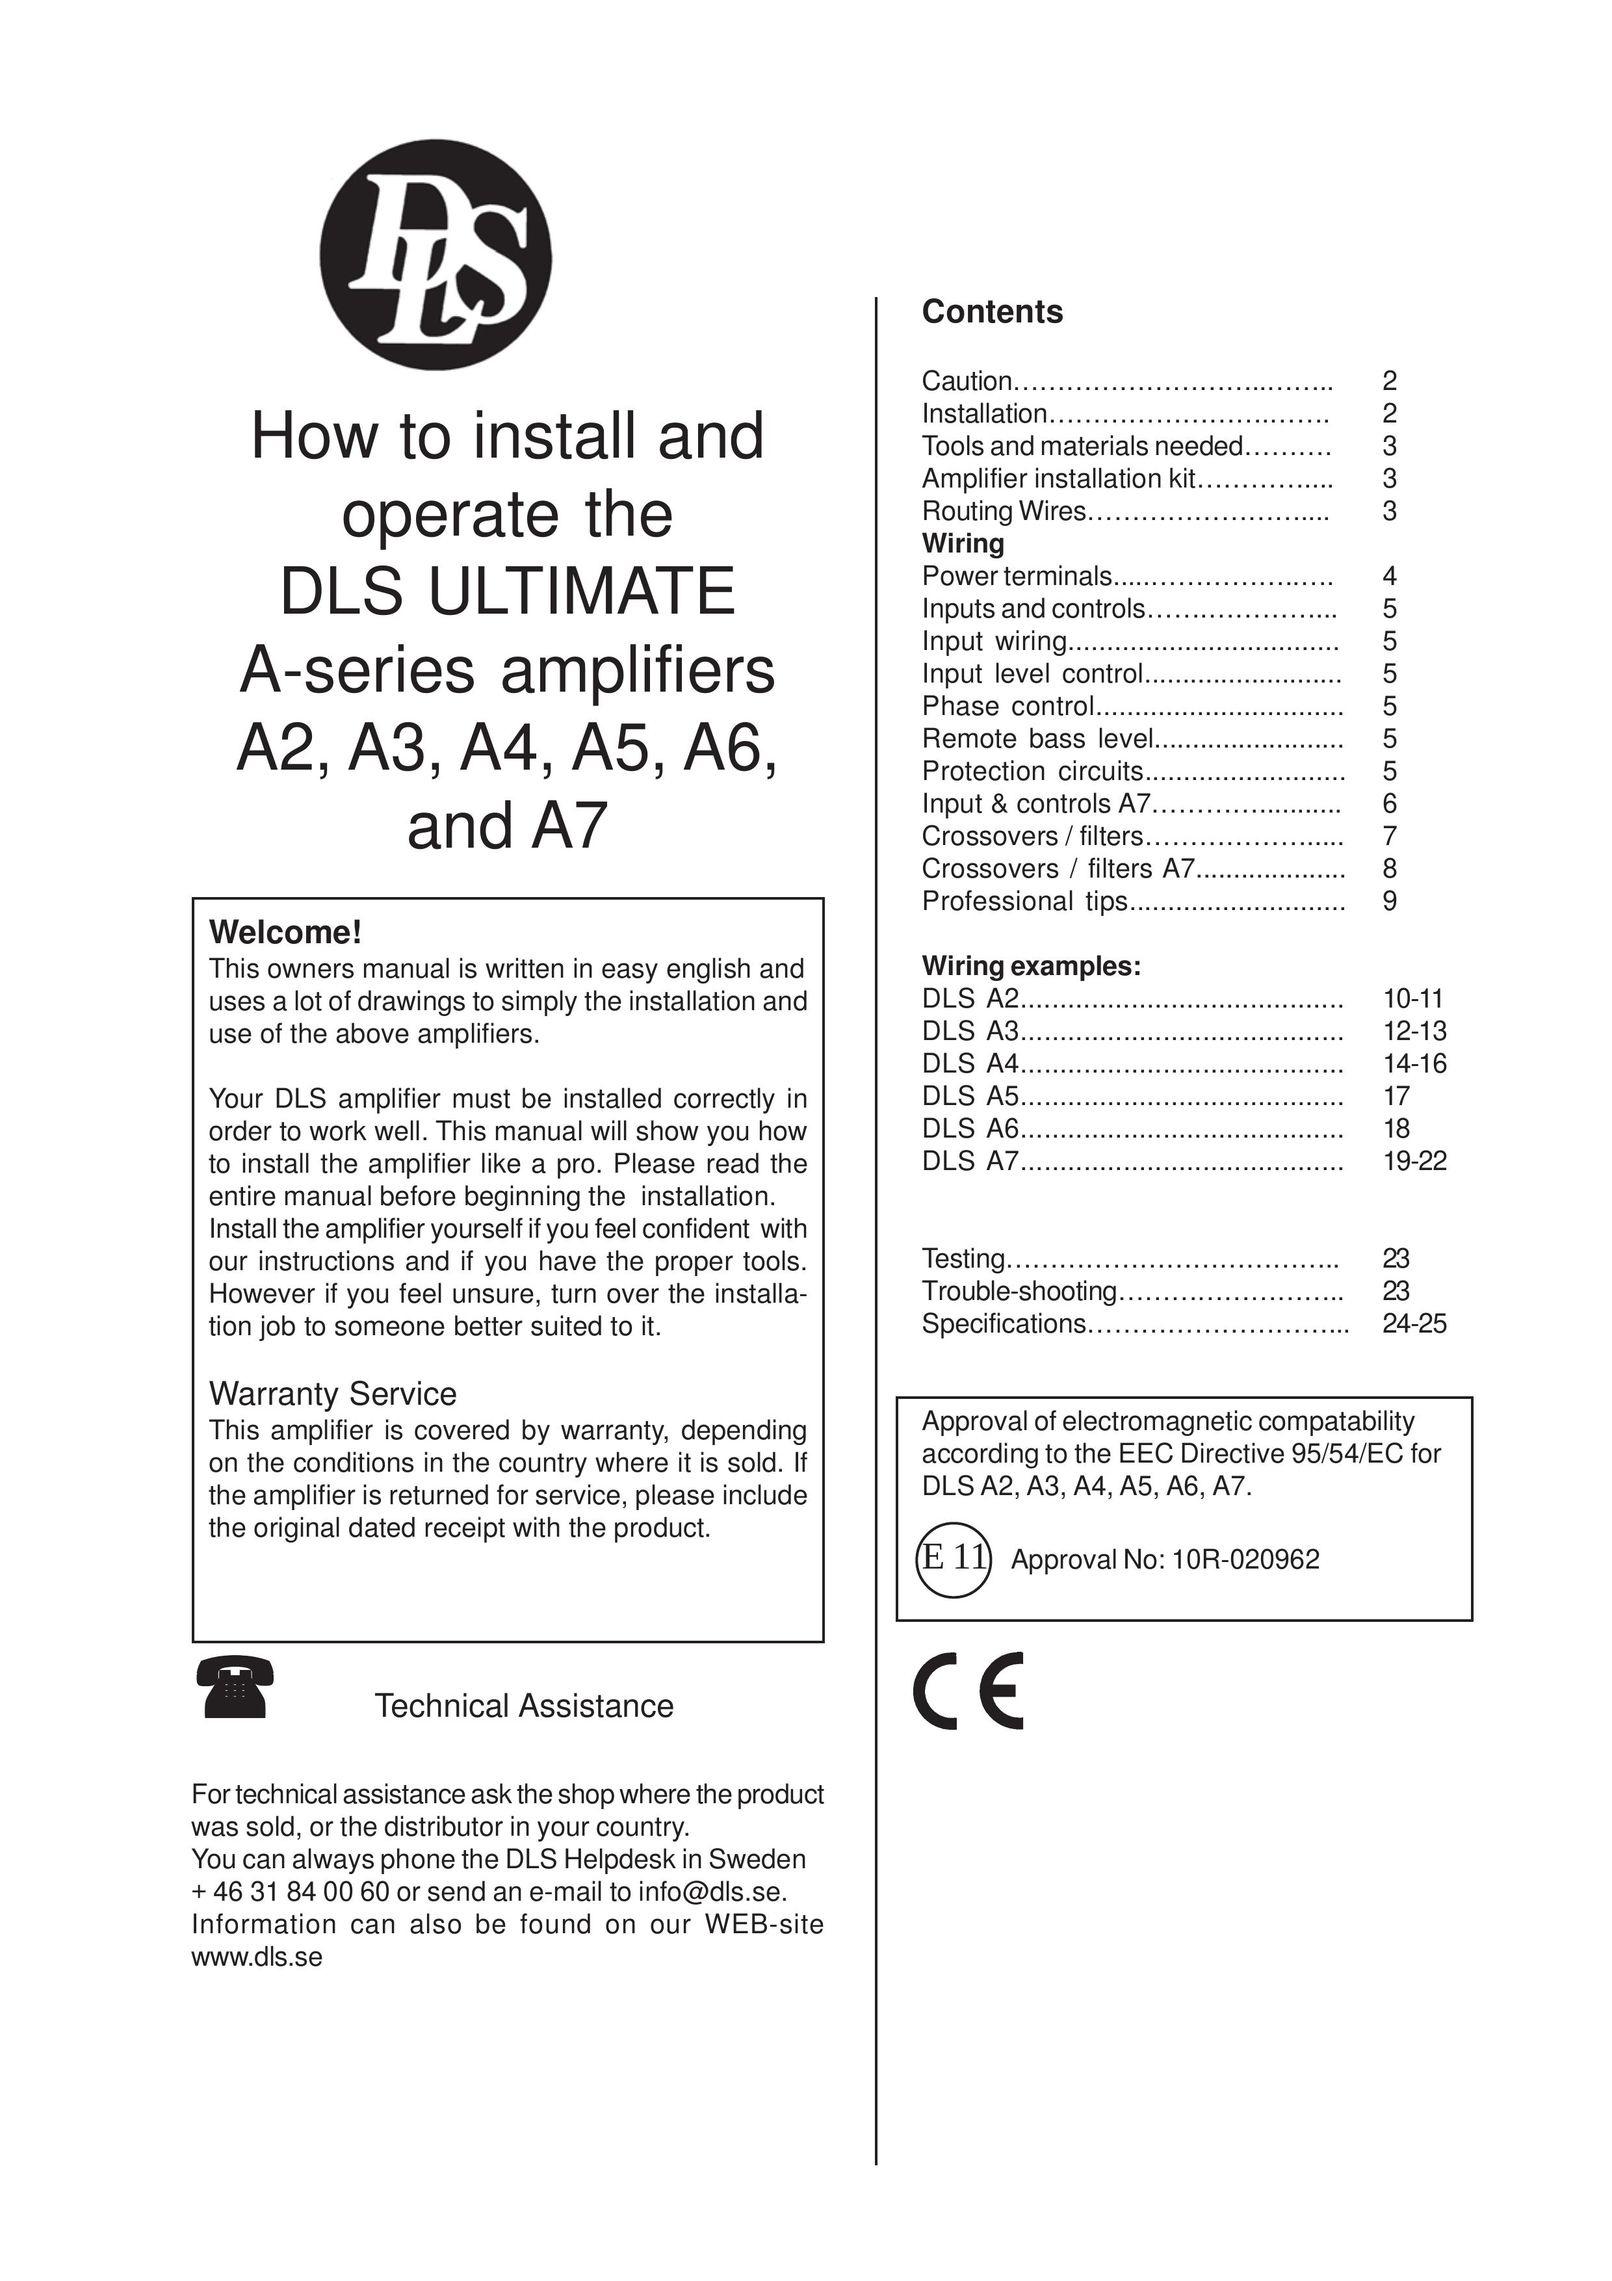 DLS Svenska AB A2 Stereo Amplifier User Manual